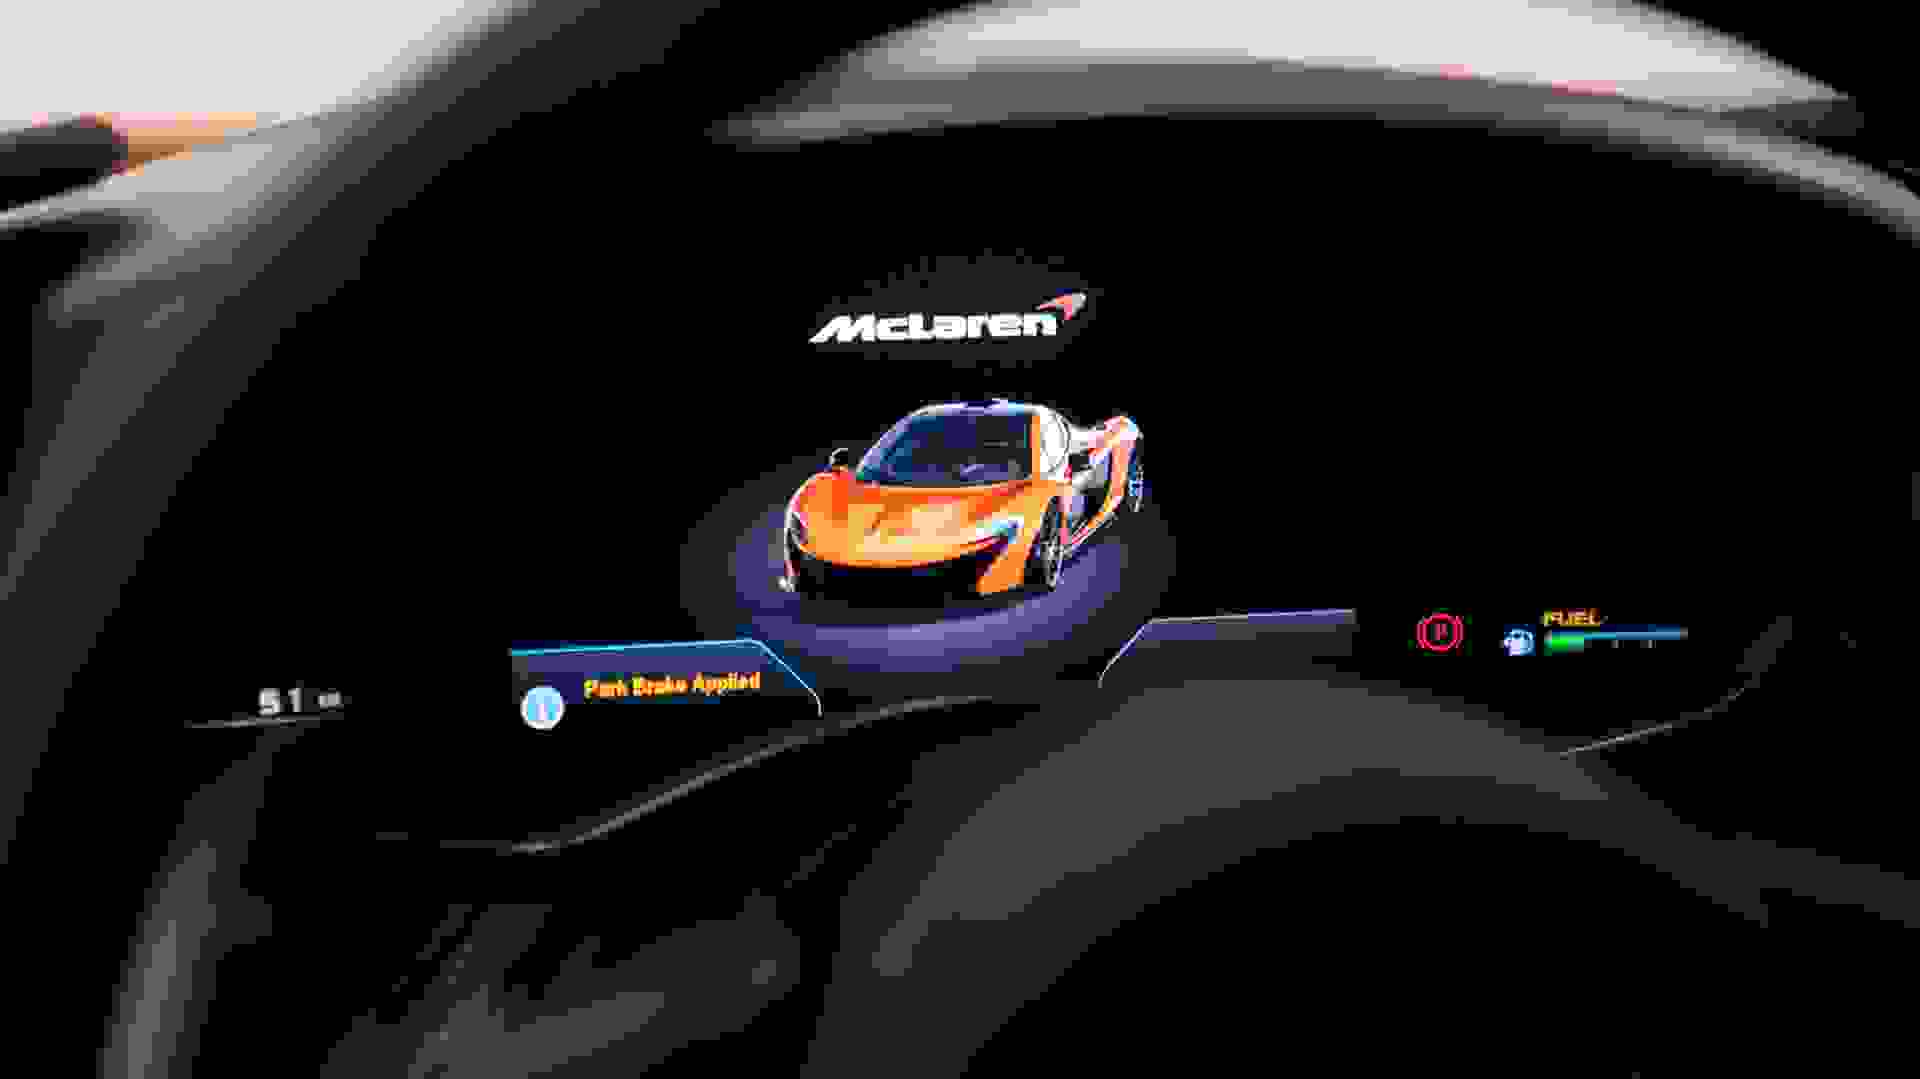 McLaren P1 Photo 53f7995d-e68c-4697-9ecb-f27795833dc3.jpg